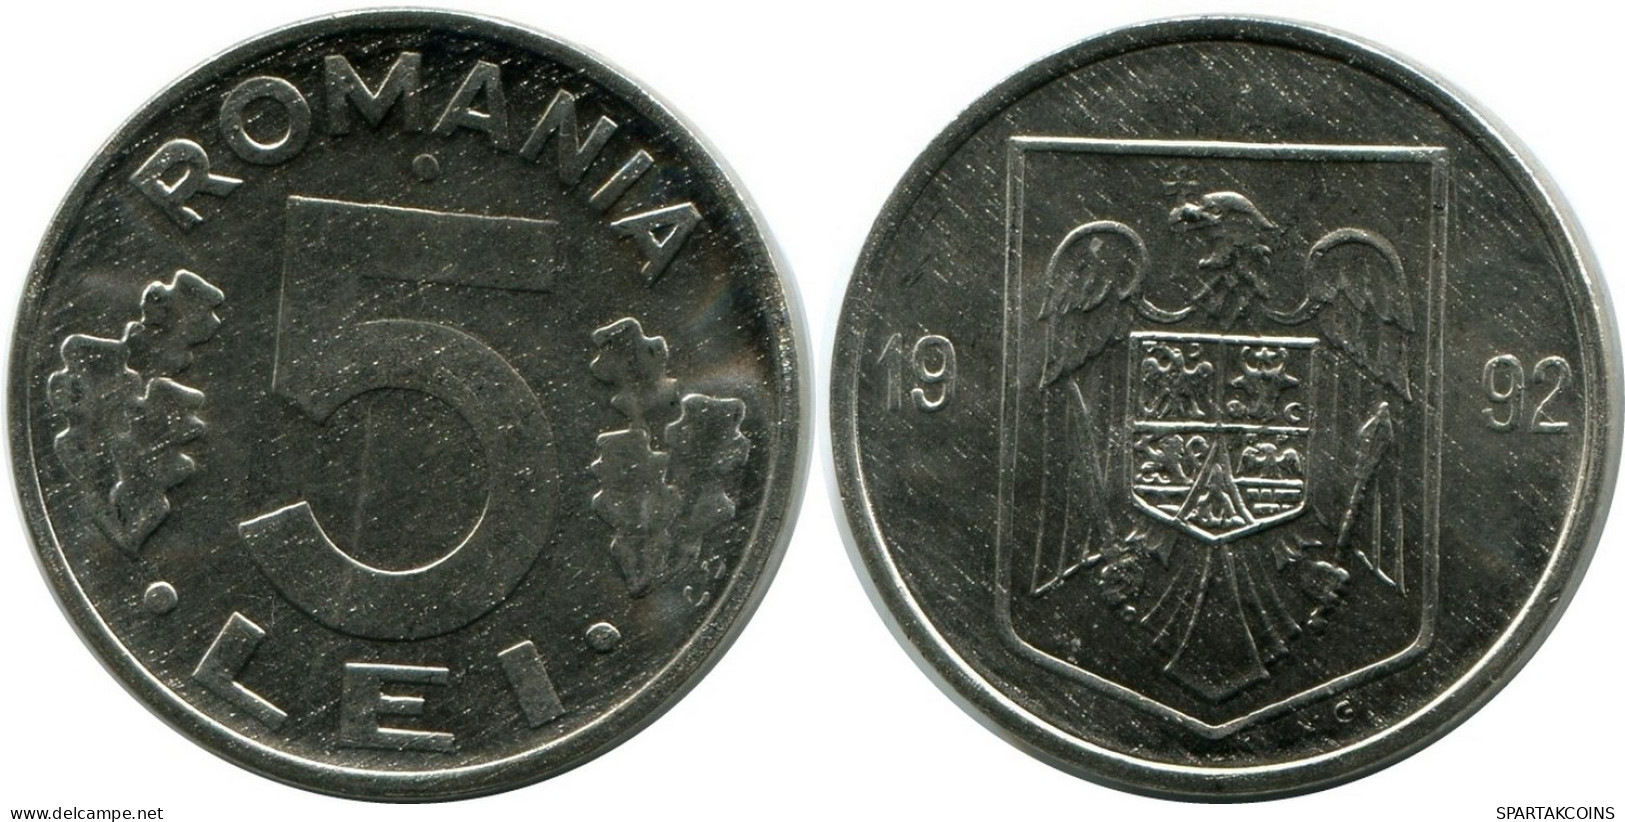 5 LEI 1992 ROMANIA UNC Eagle Coin #M10392.U.A - Rumänien